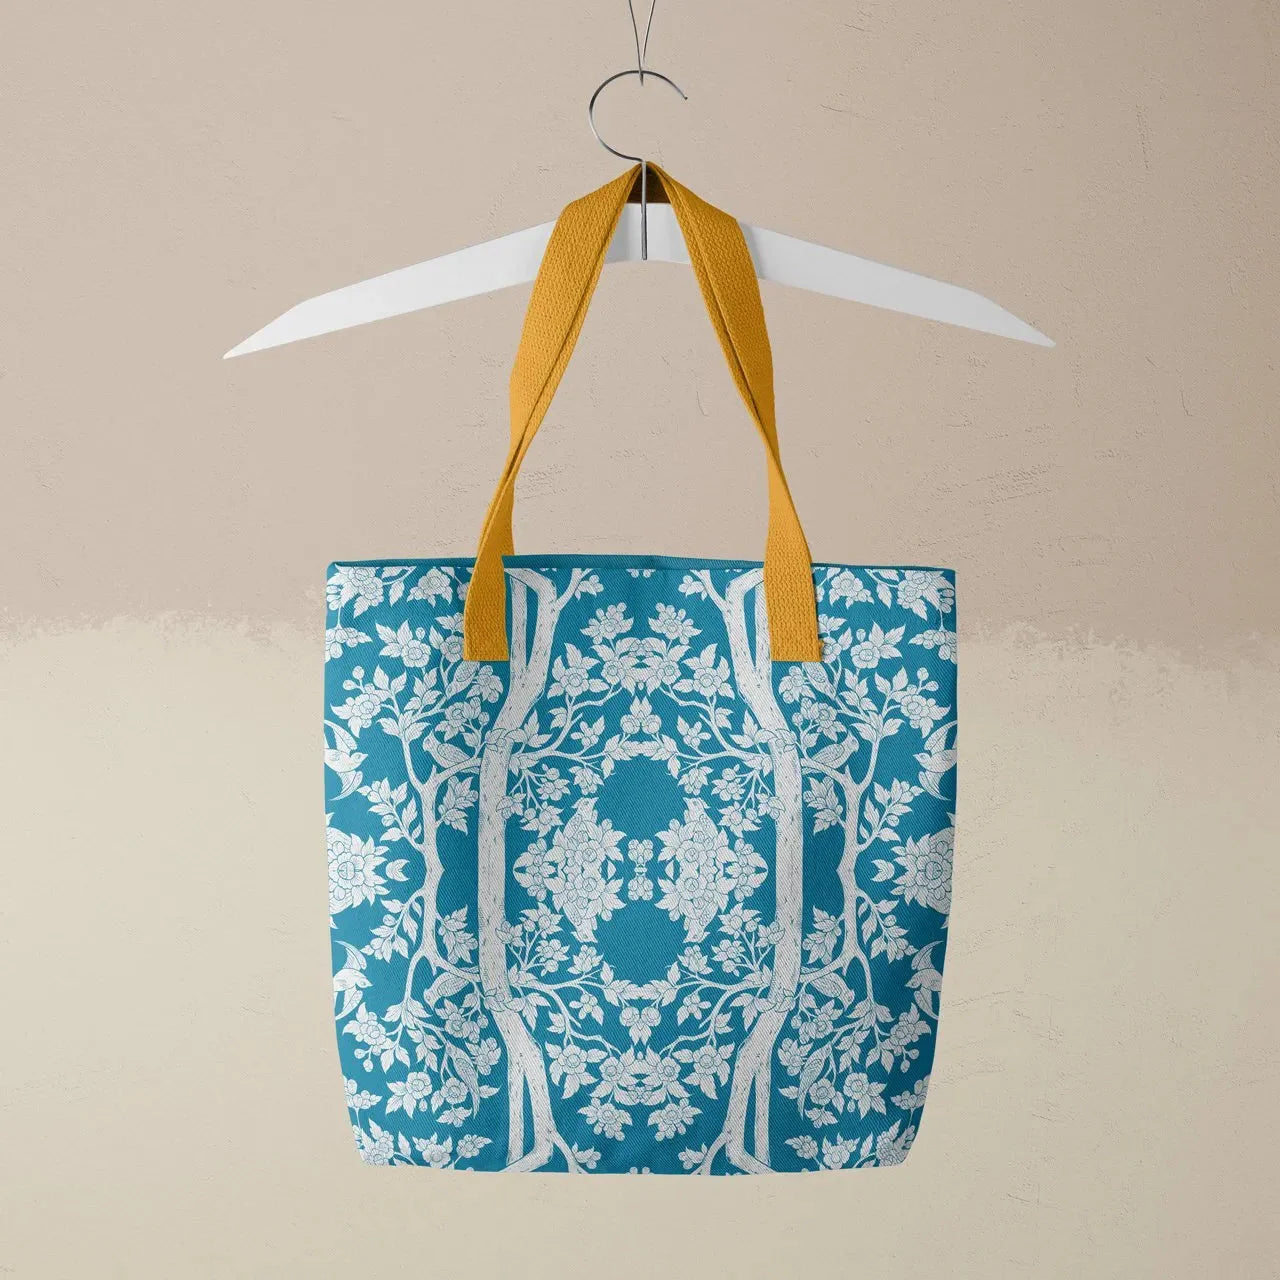 Aviary Tote - Bluebird - Heavy Duty Reusable Grocery Bag - Shopping Totes - Aesthetic Art